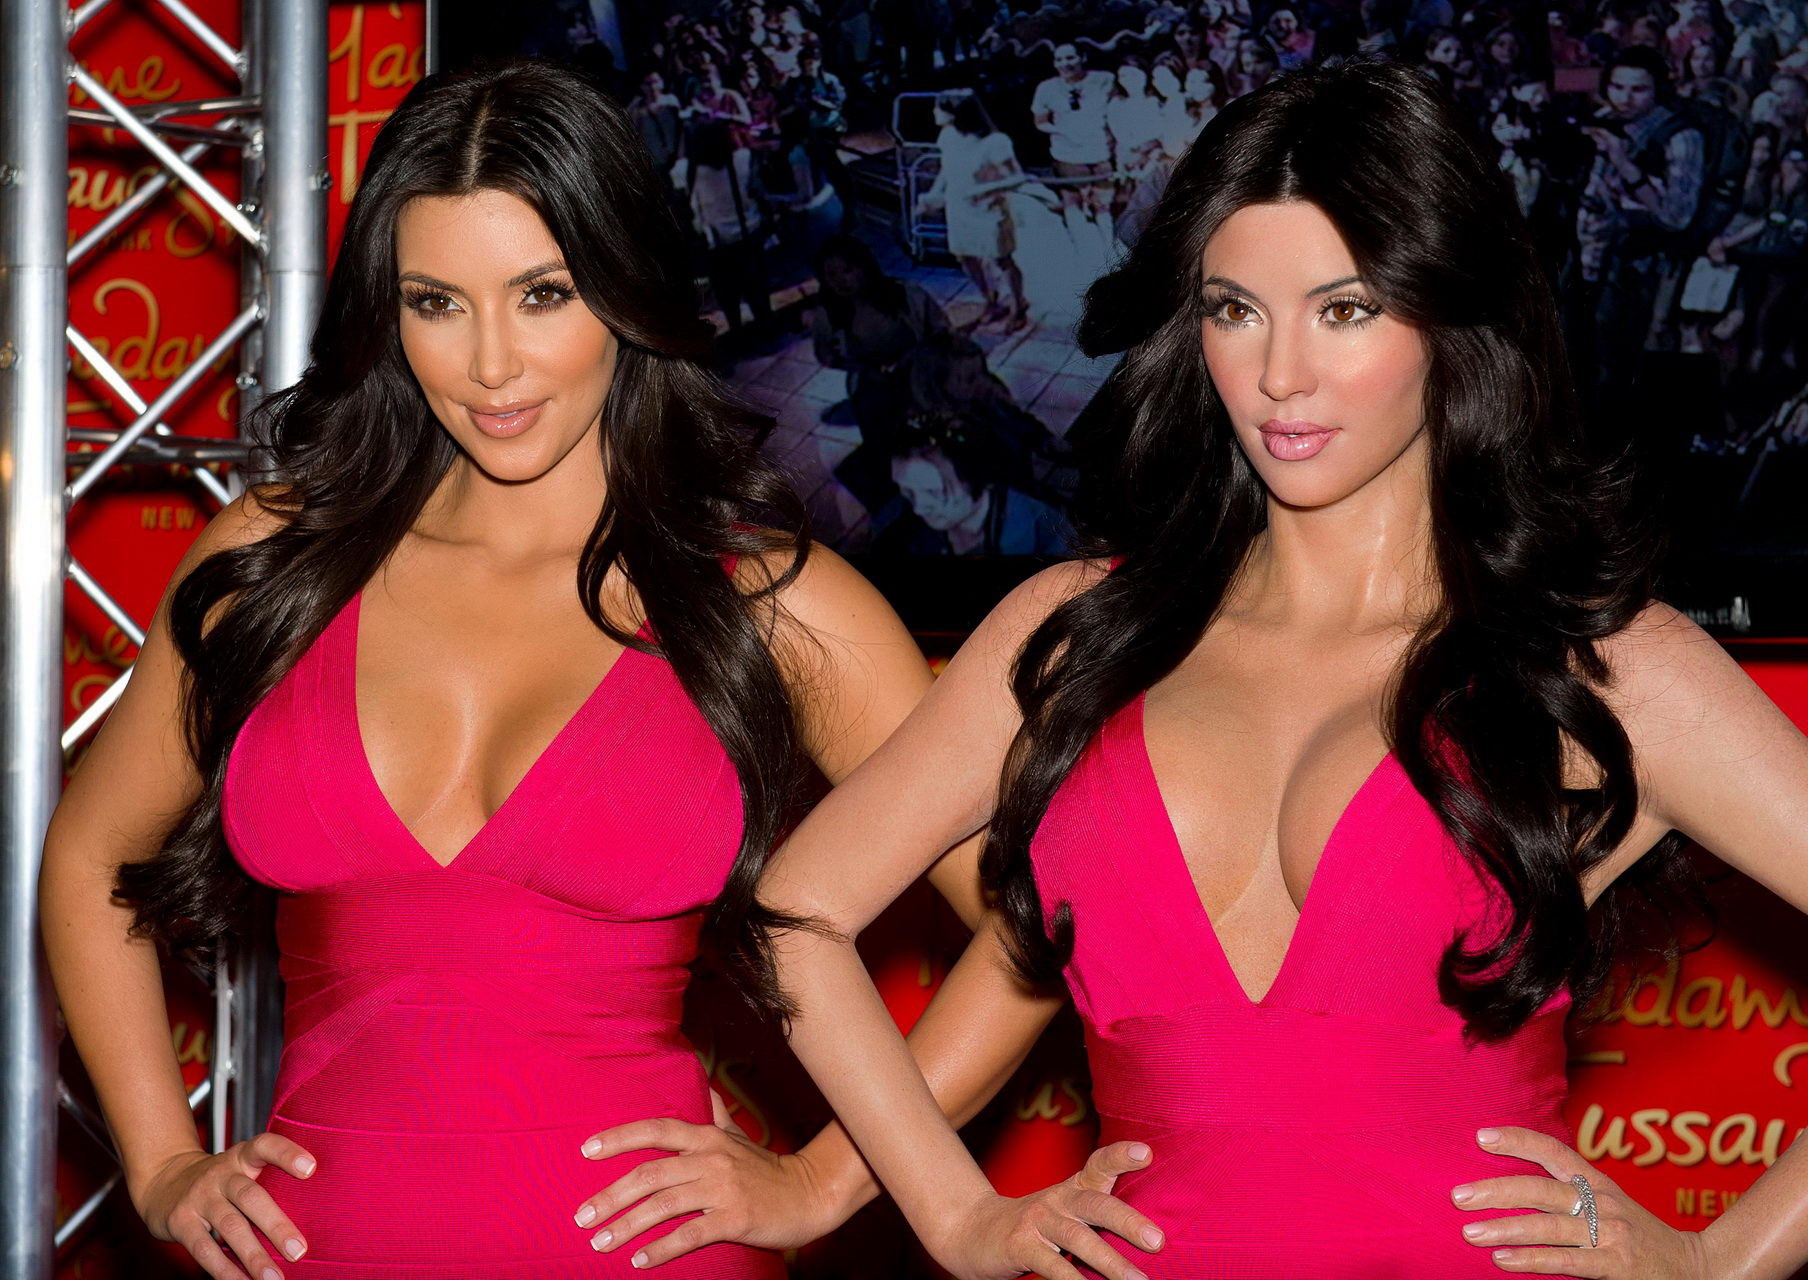 Kim Kardashian en robe rose moulante posant avec son mannequin de cire chez Madame Tus.
 #75342657